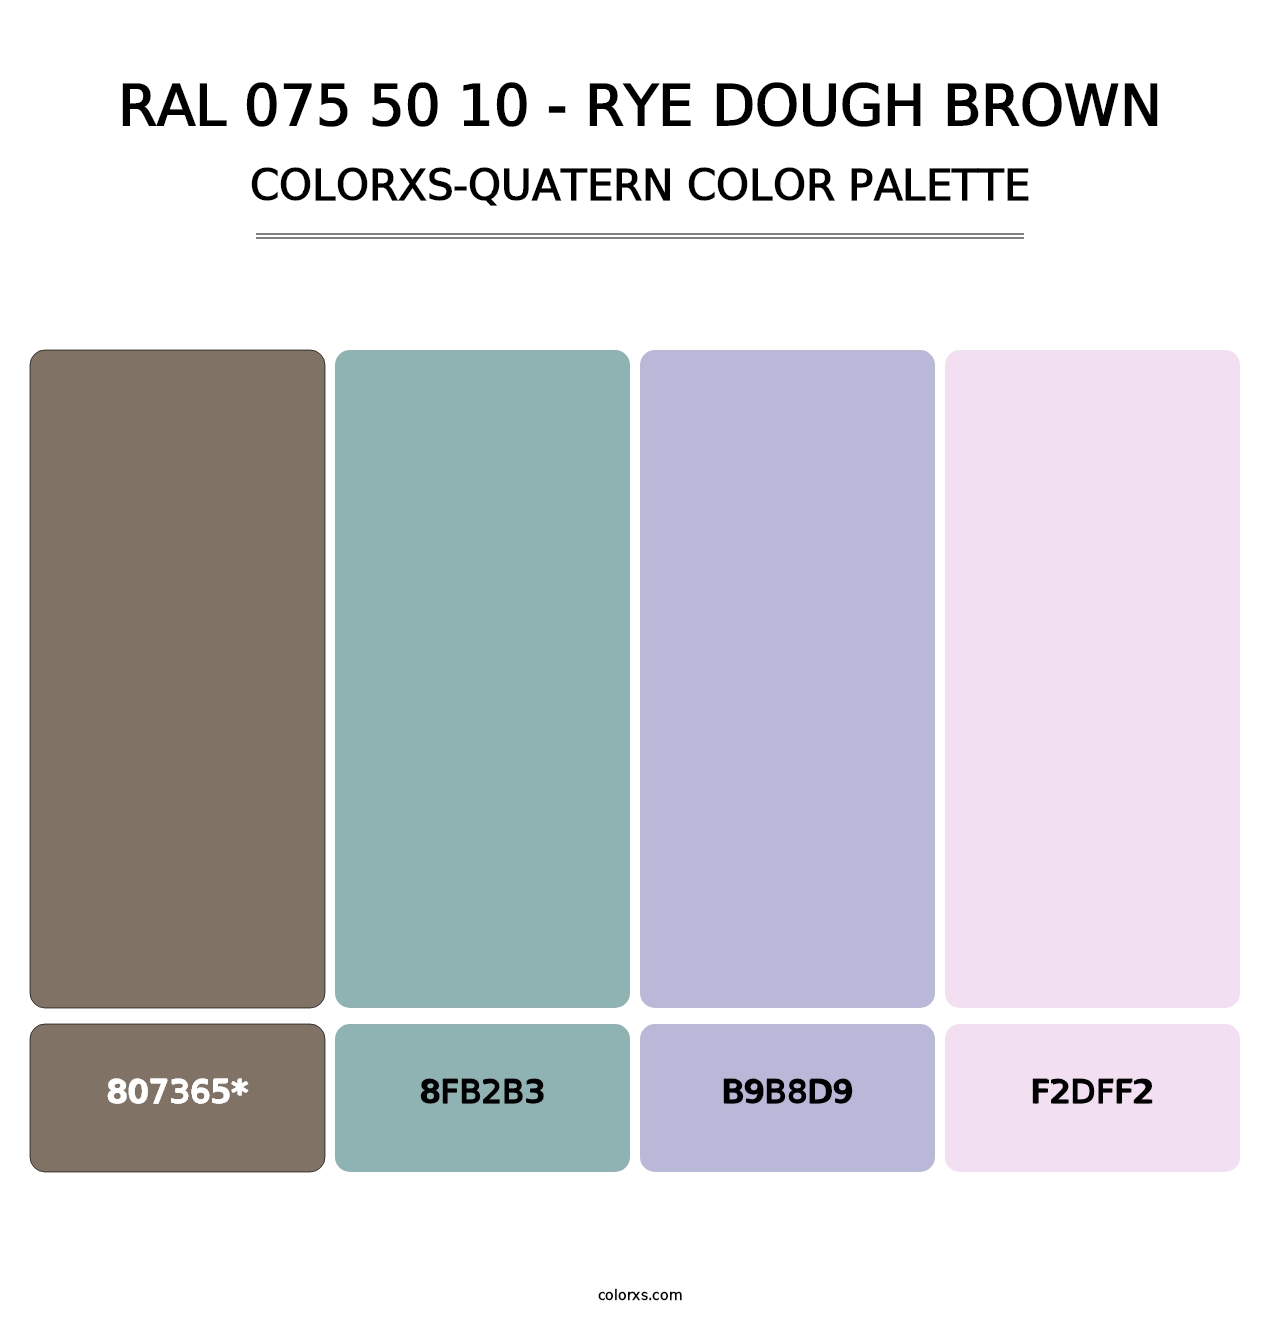 RAL 075 50 10 - Rye Dough Brown - Colorxs Quatern Palette